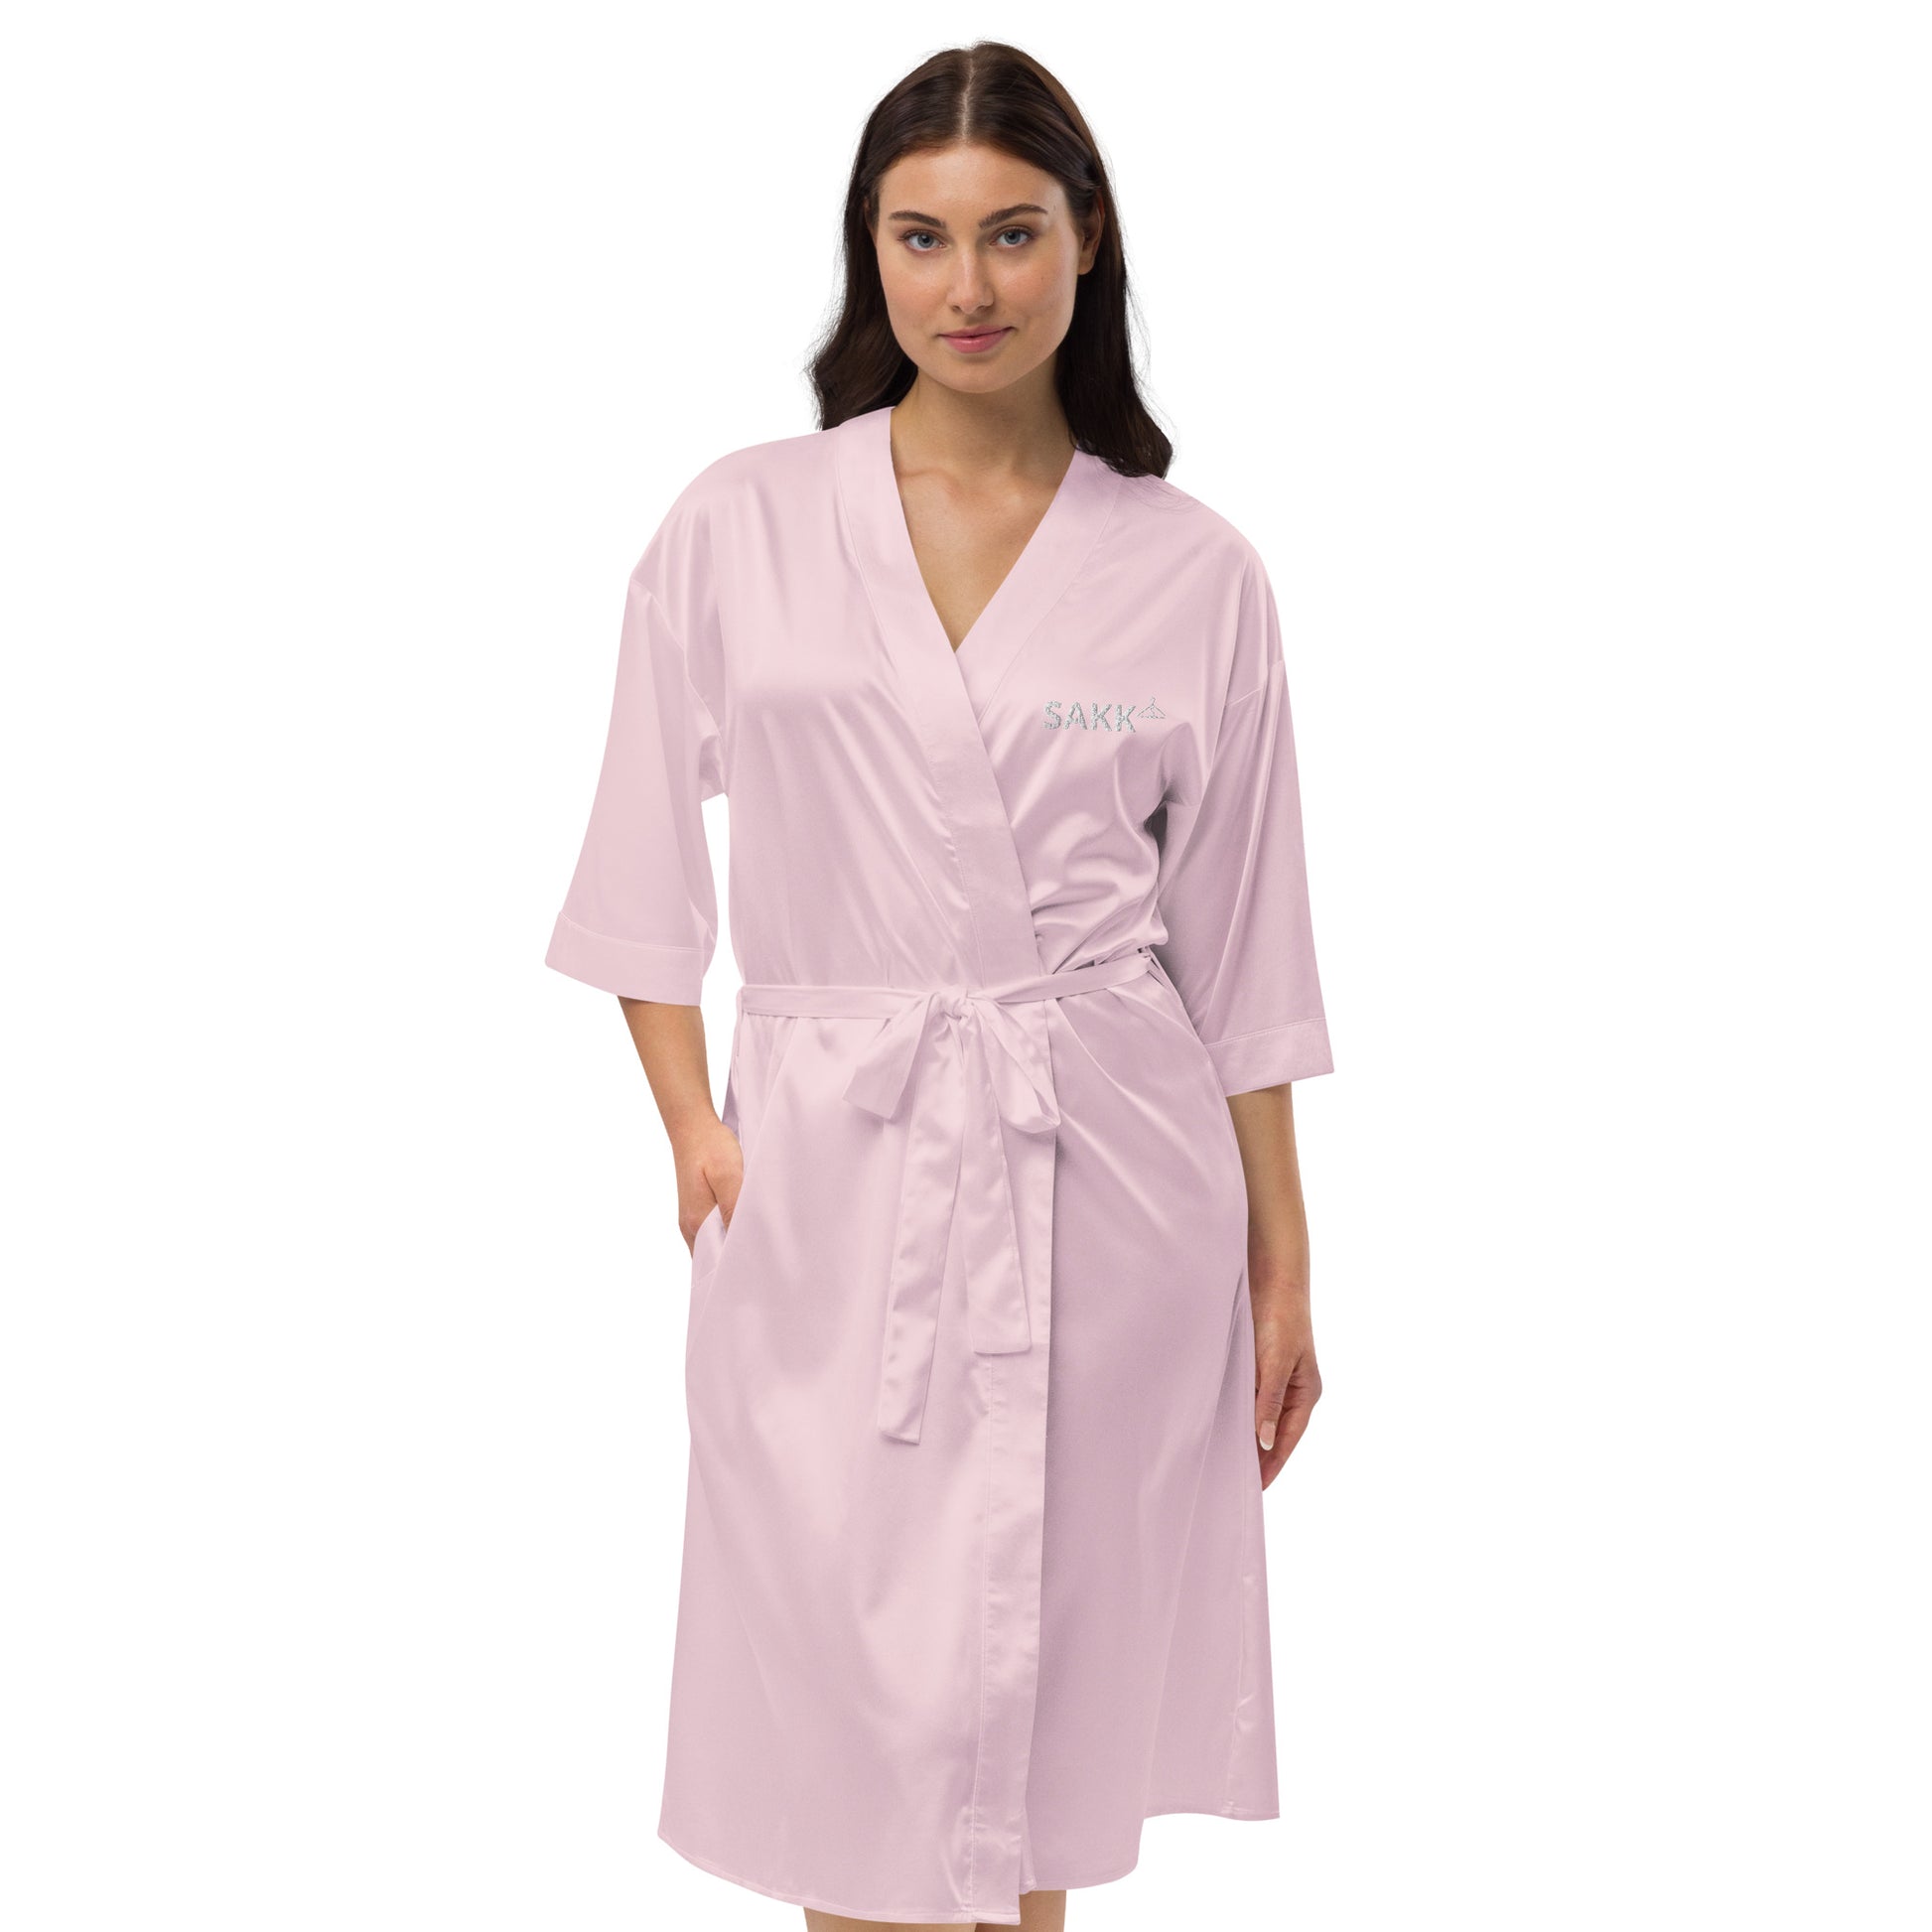 Sasha Satin robe sakkstyles.com